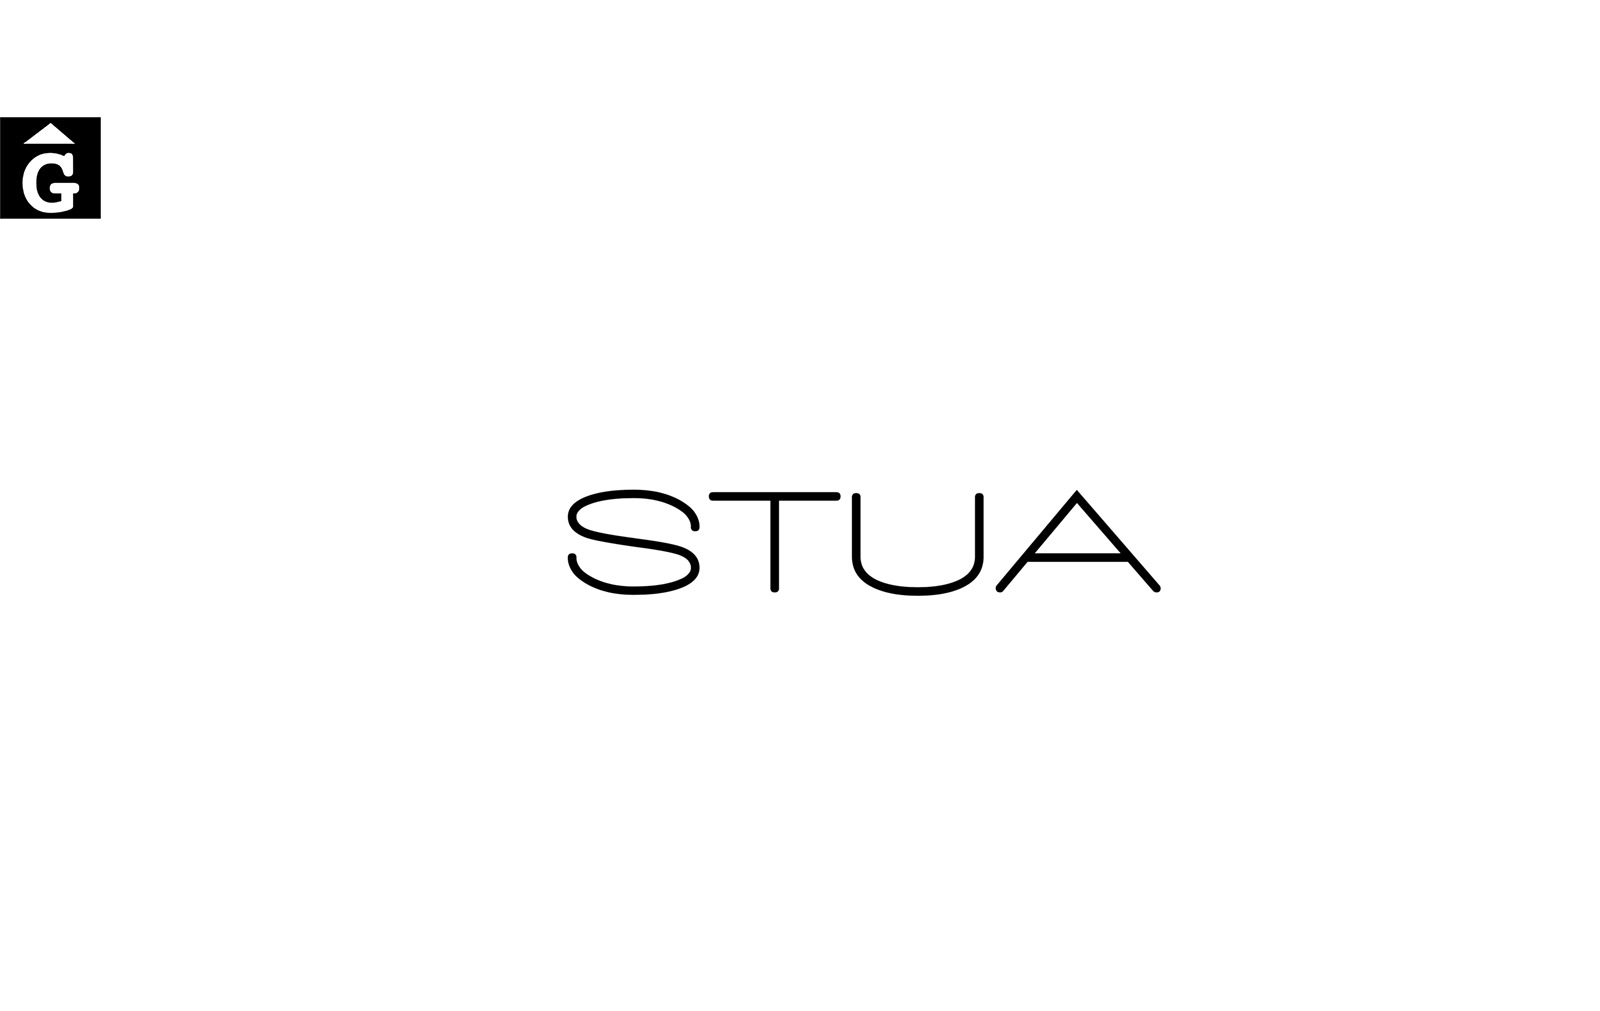 Stua logo marca mobles Gifreu